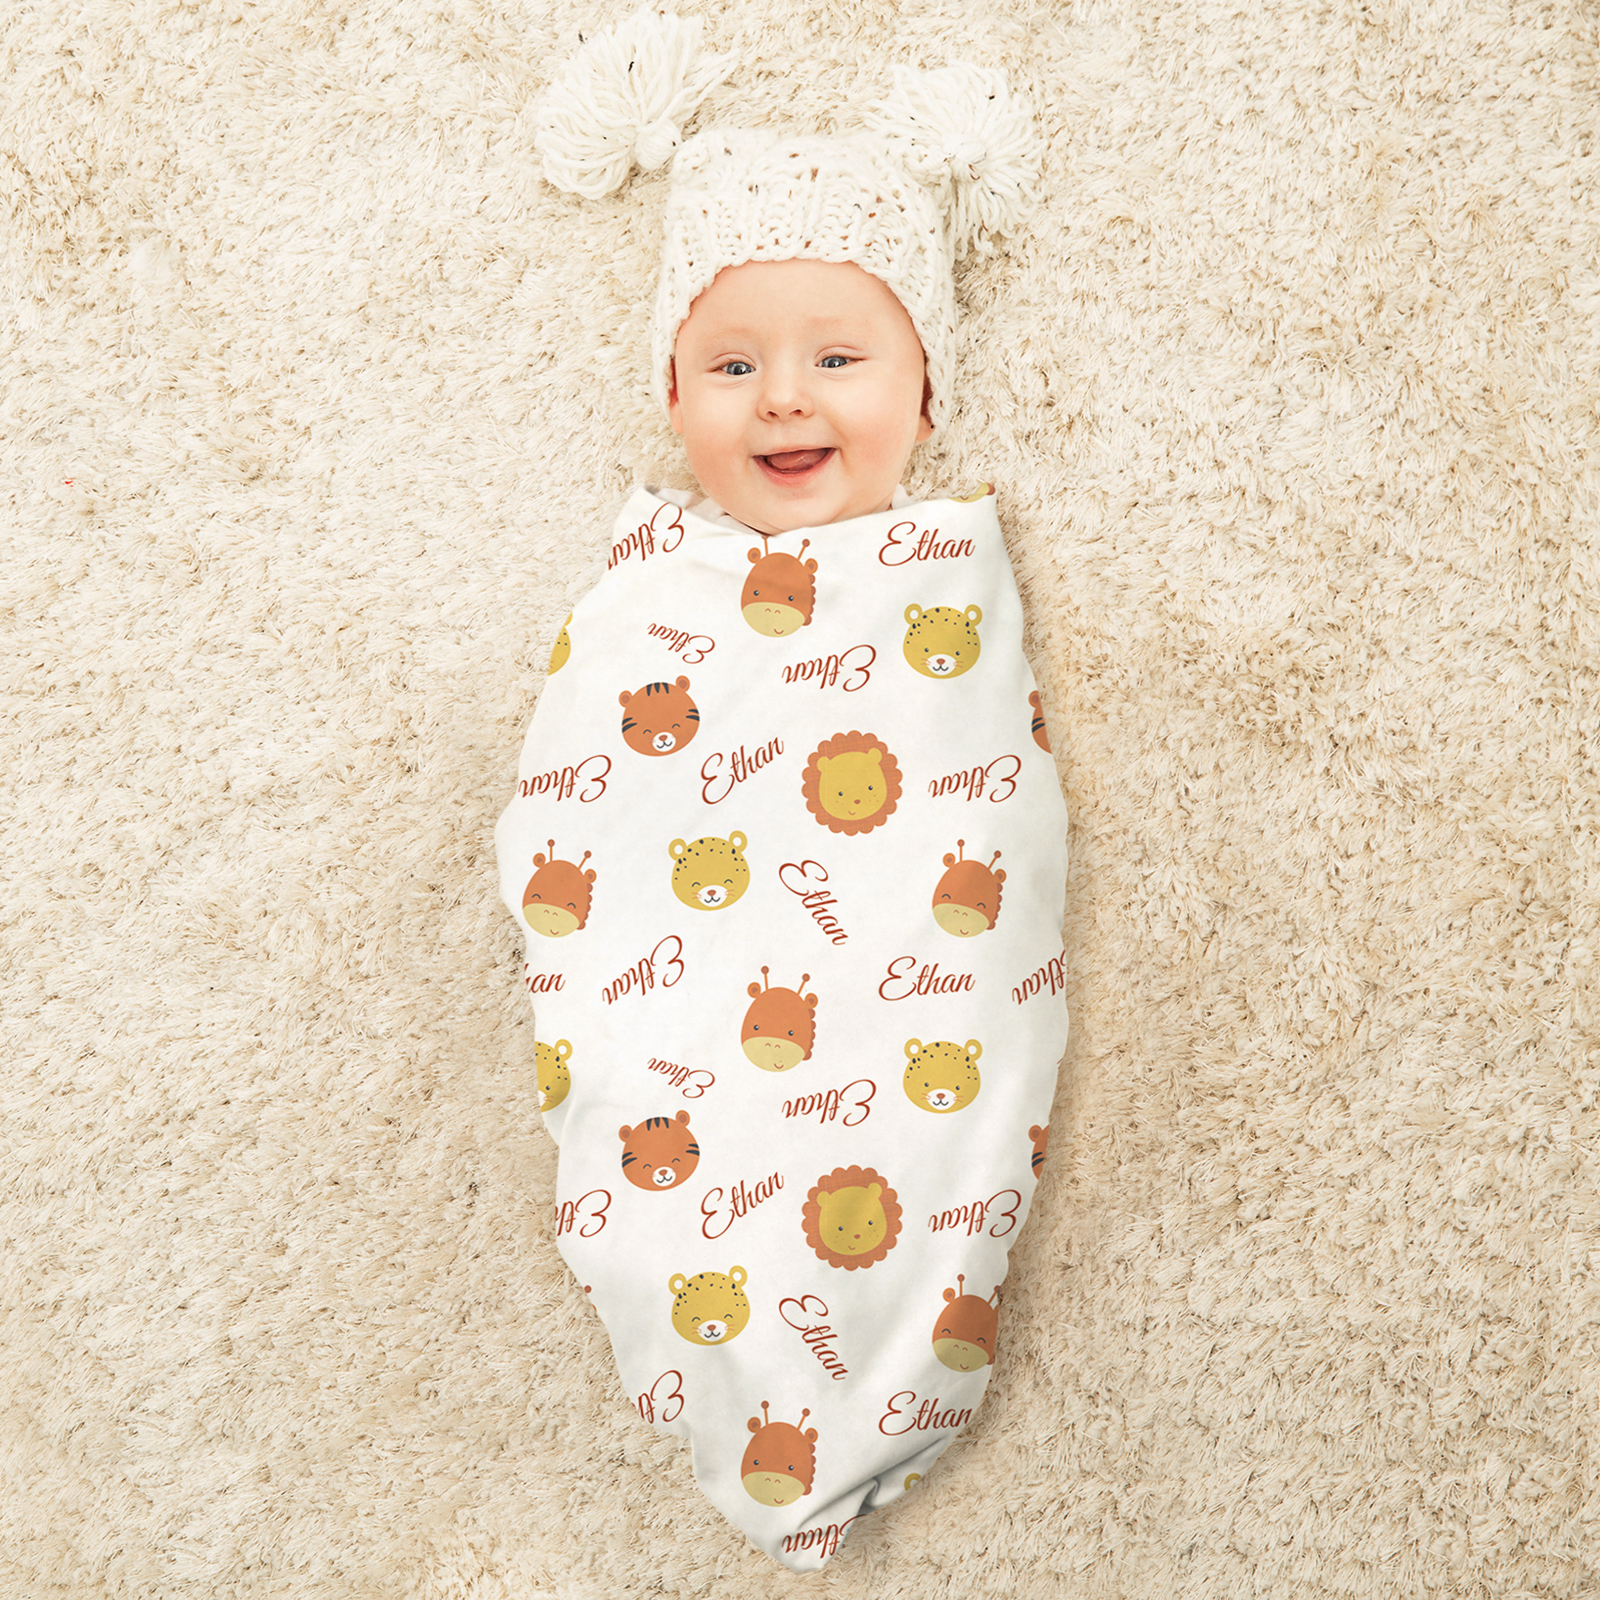 Ethan's Personalized Baby Name Blanket, Safari Animals